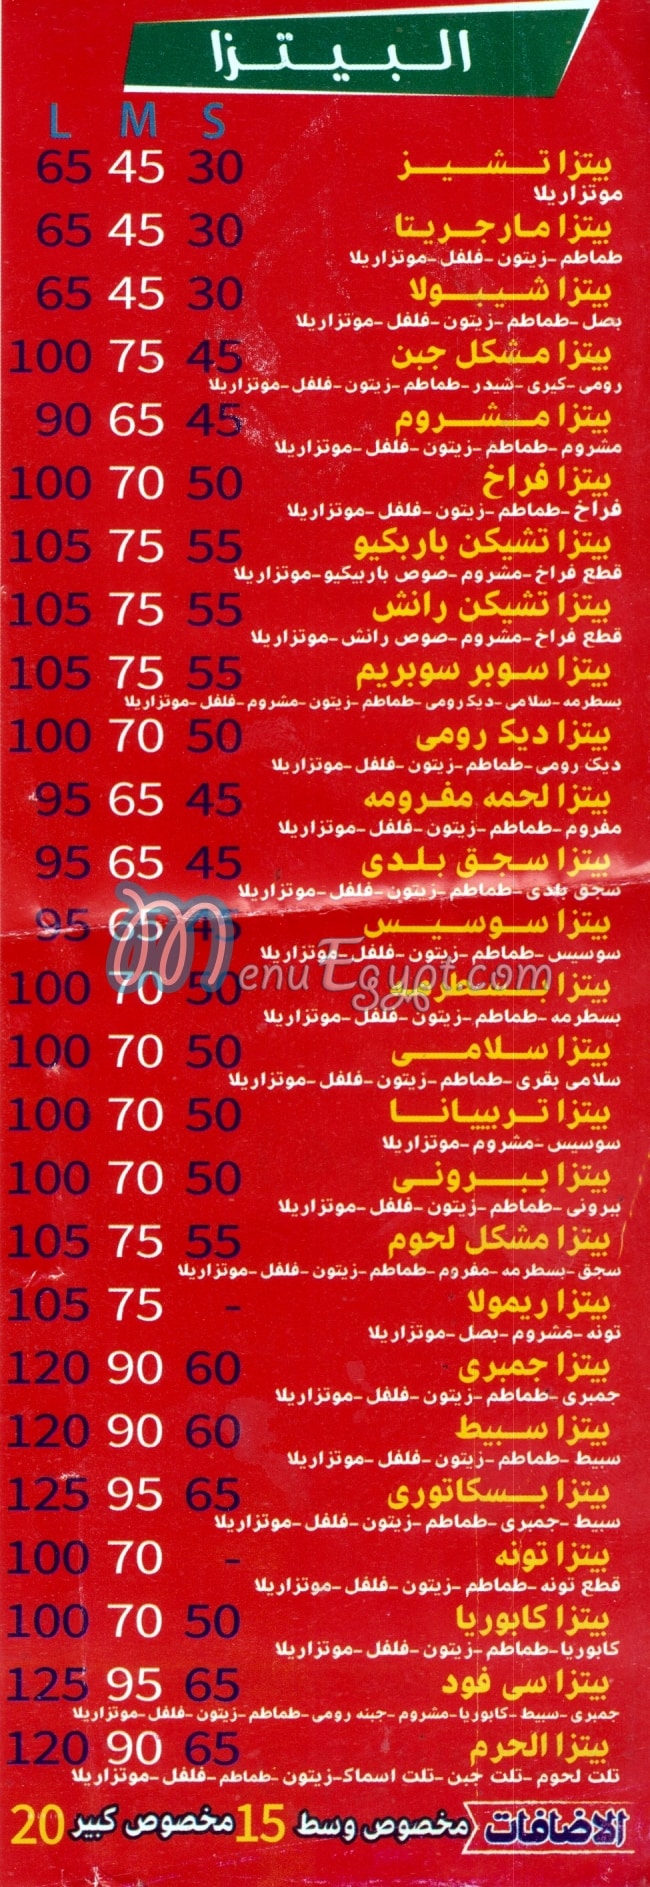 رقم الحرم مصر